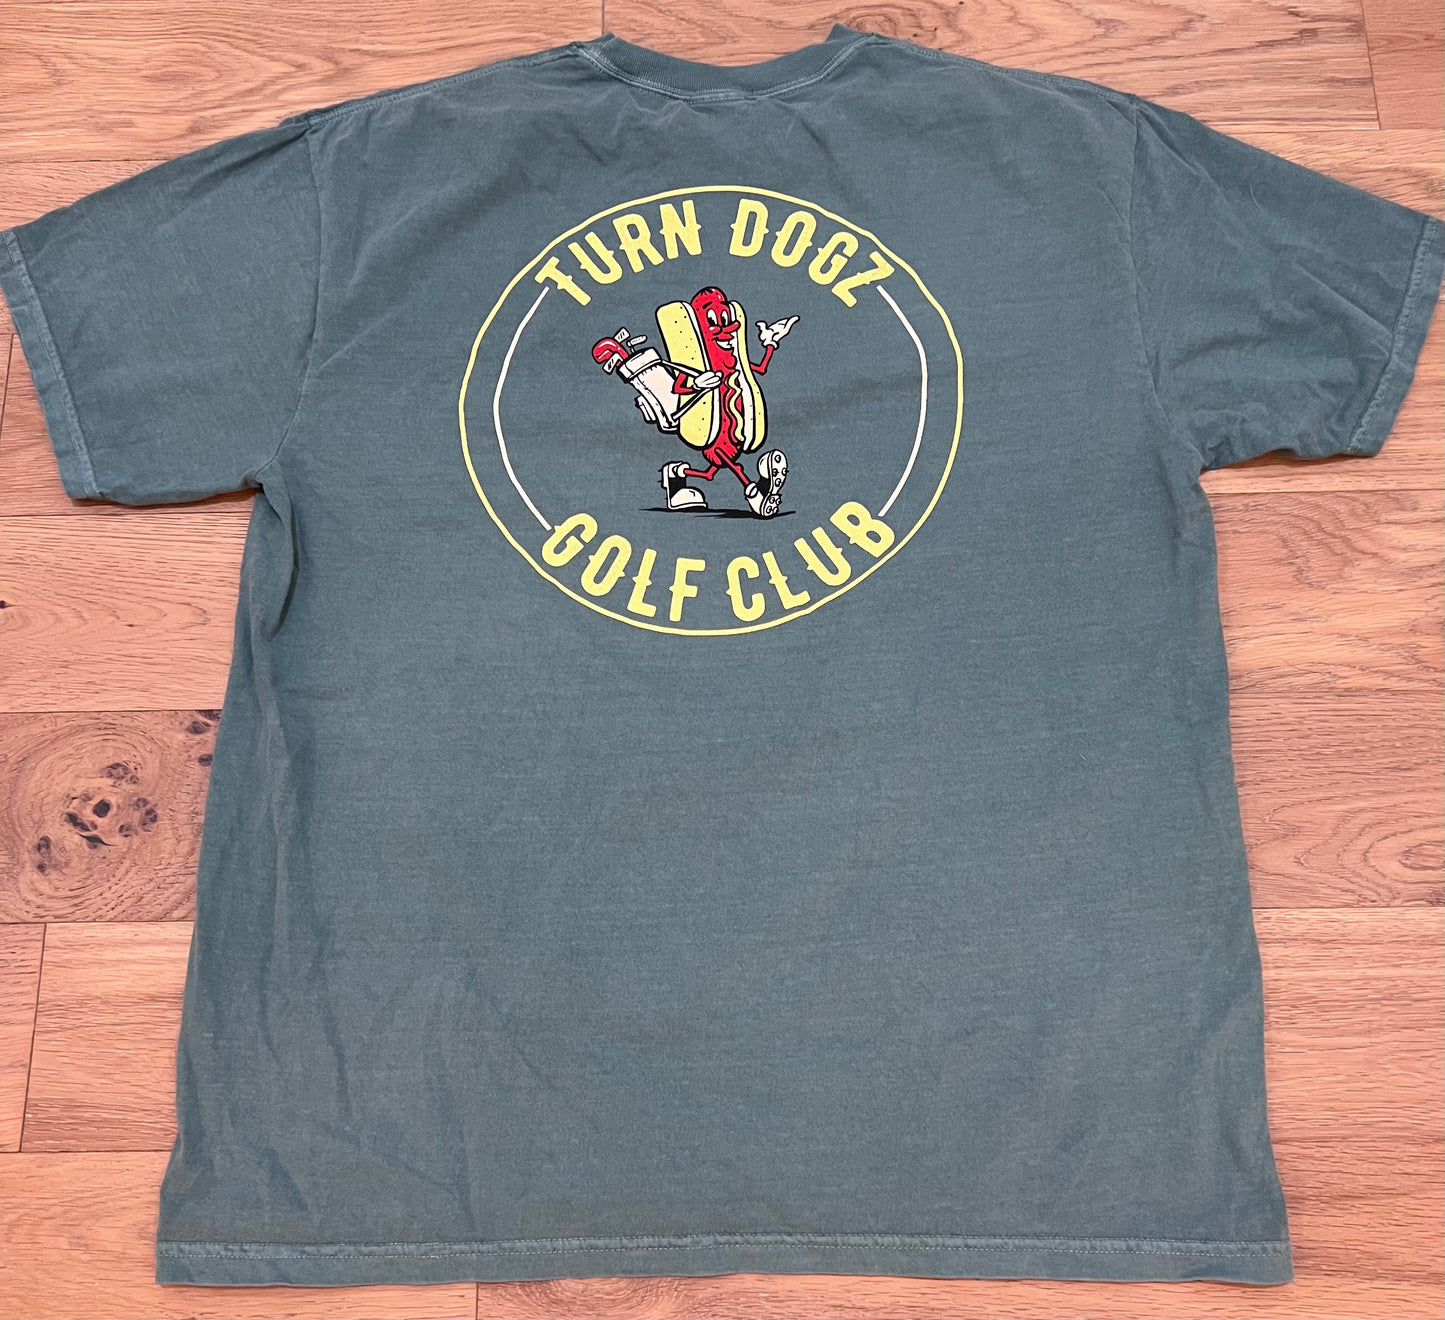 Turn Dogz Golf Club Shirts